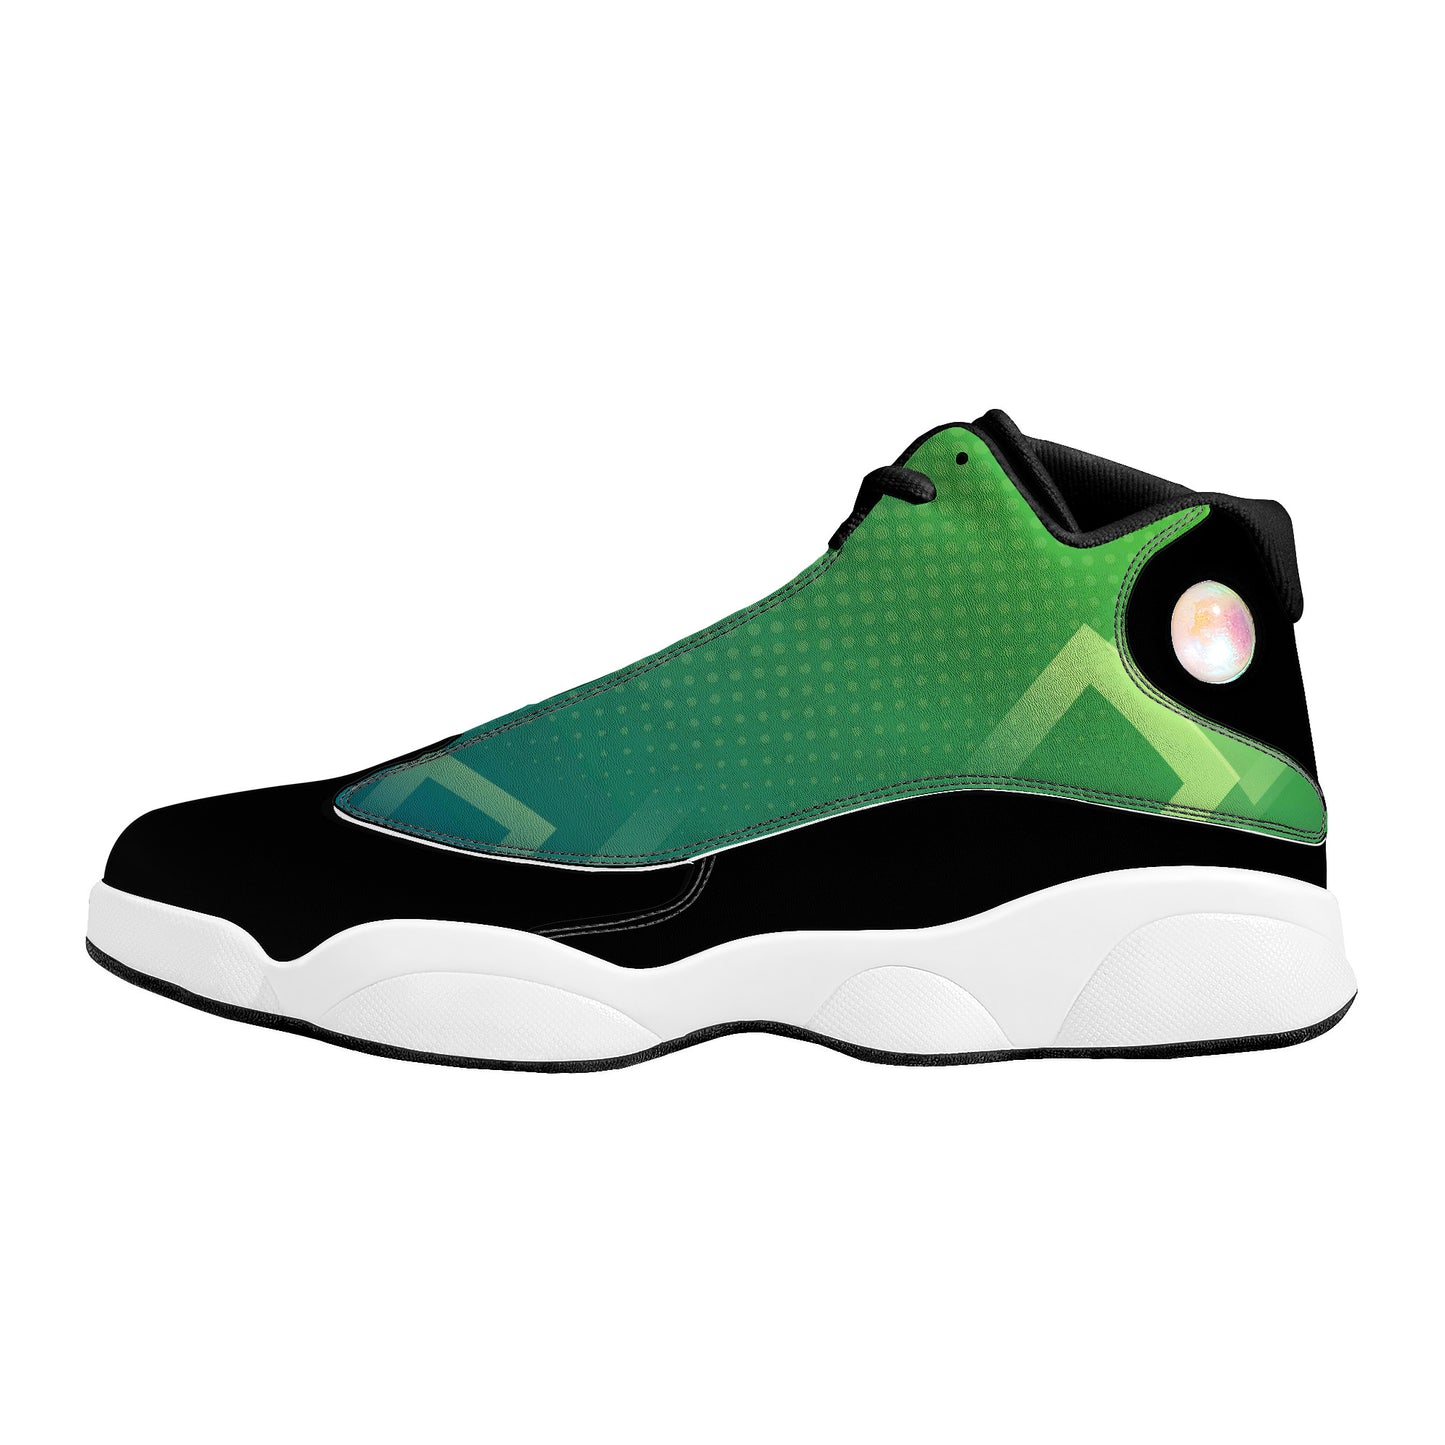 Basketball Shoes - Black/Green